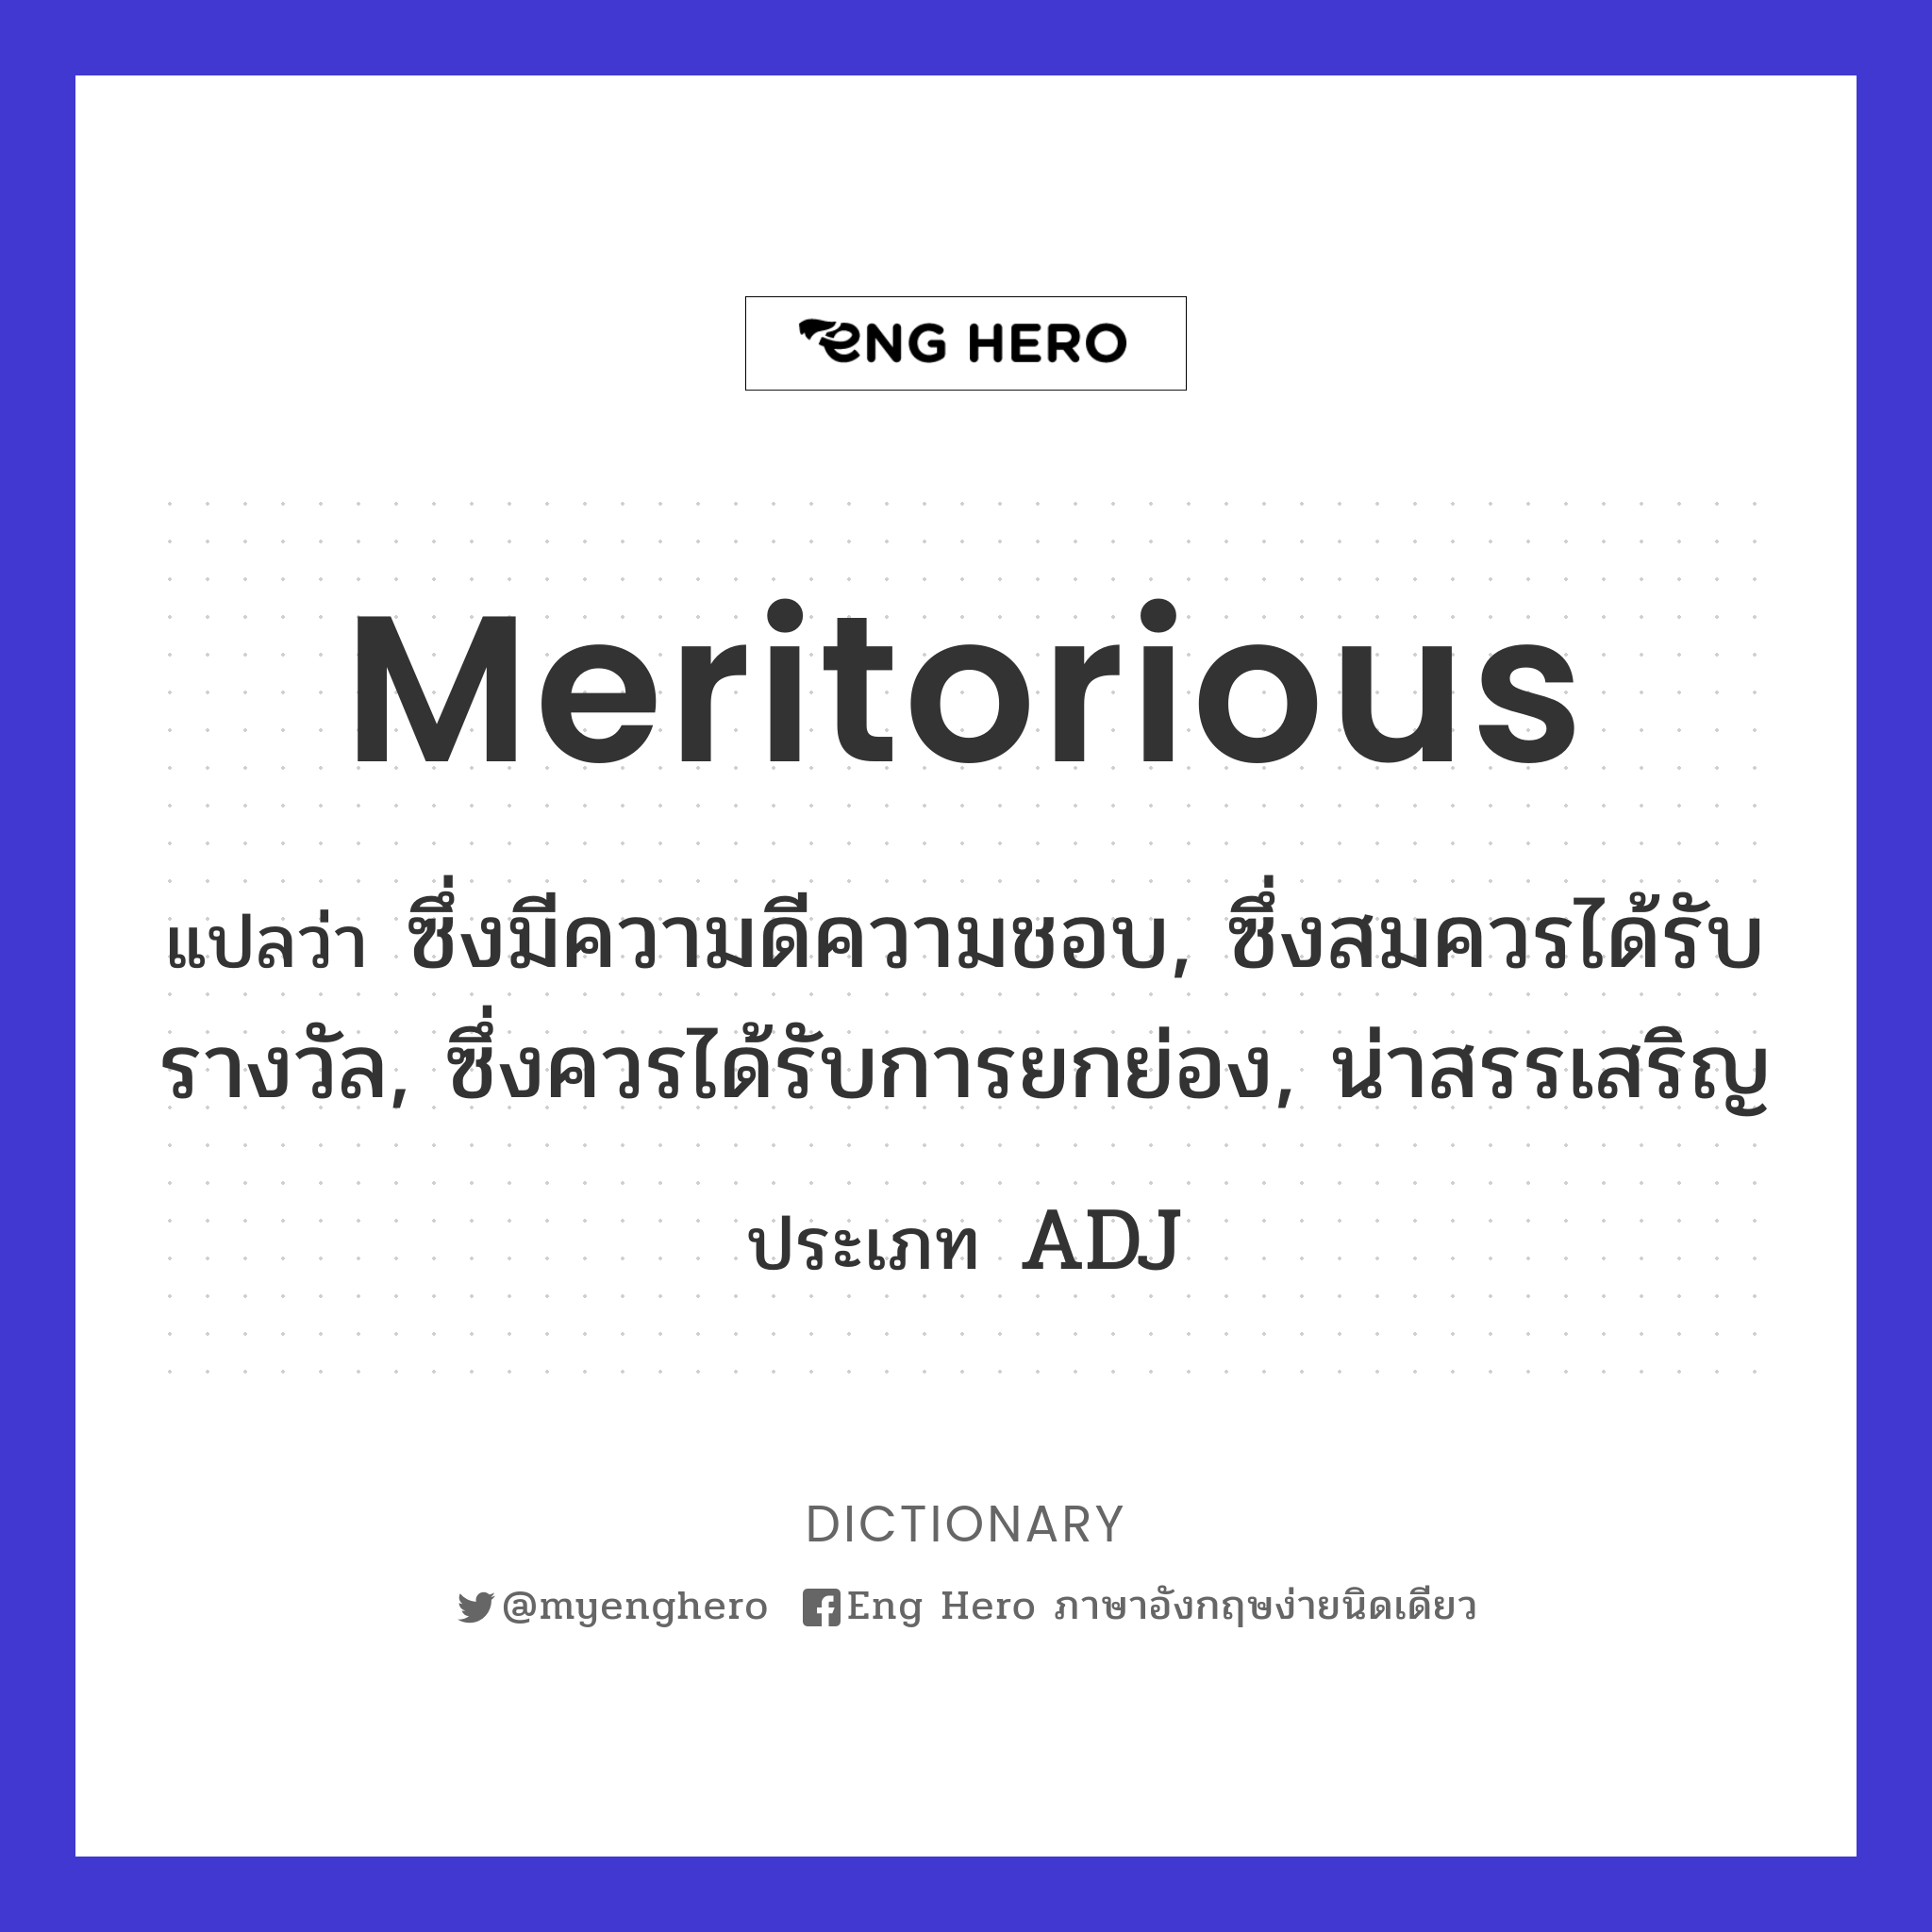 meritorious